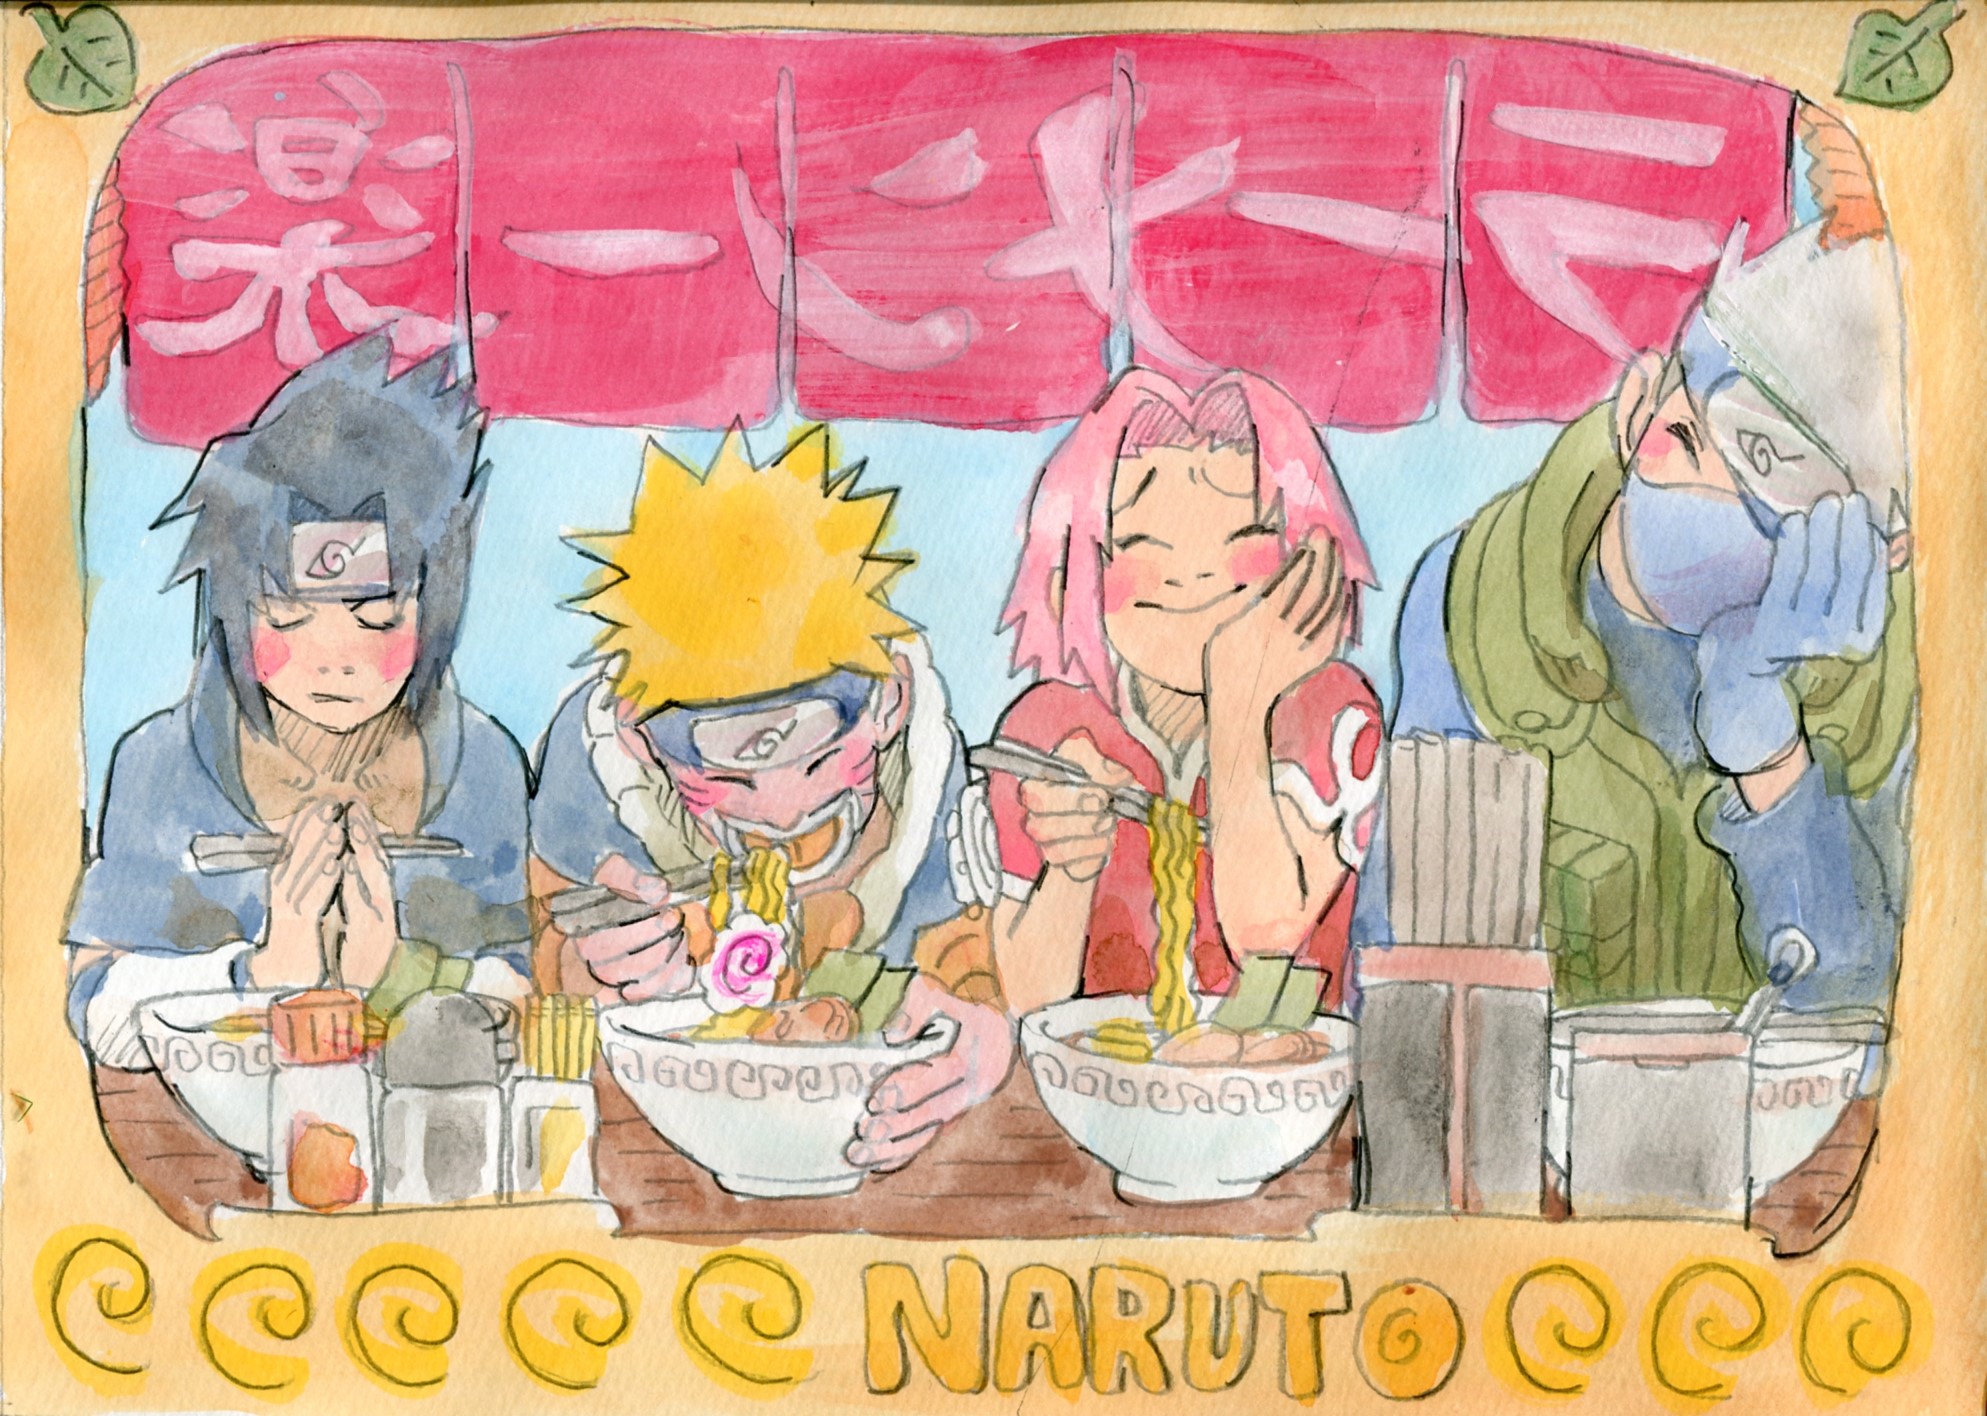 Naruto ラーメン食べよう ふきのとうのイラスト Pixiv